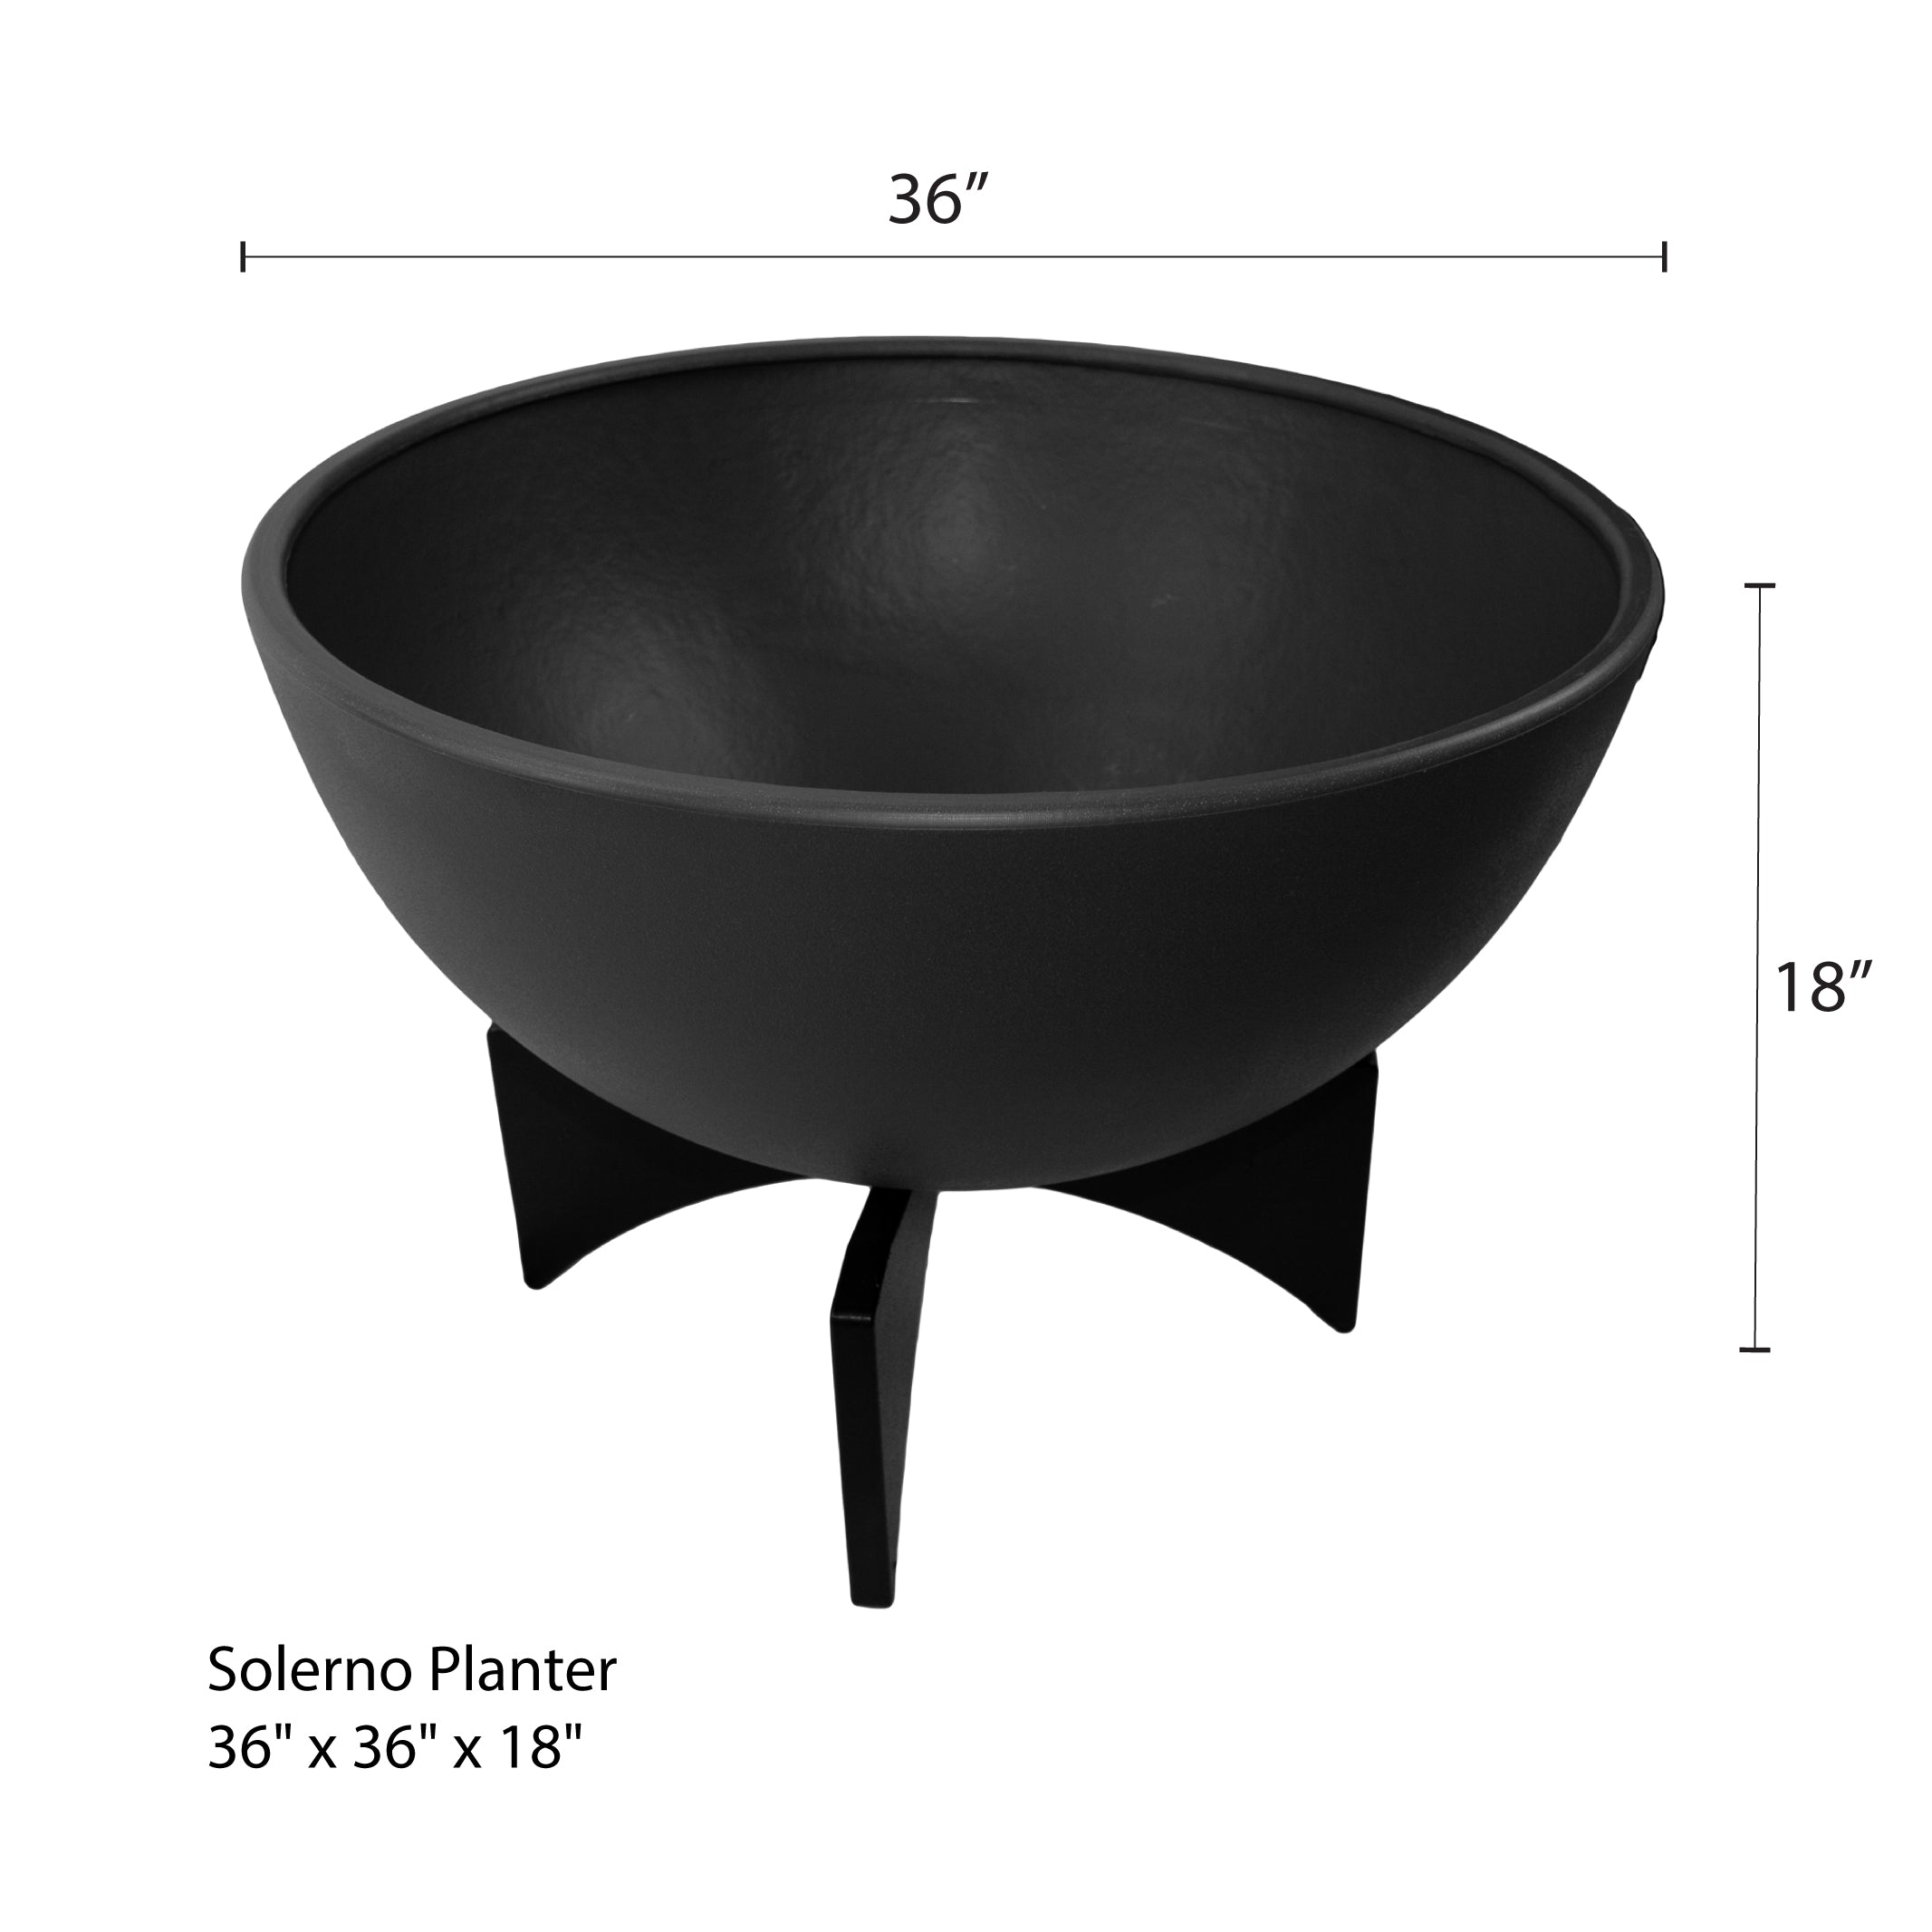 Graphite half dome solerno planter with measurements (large)